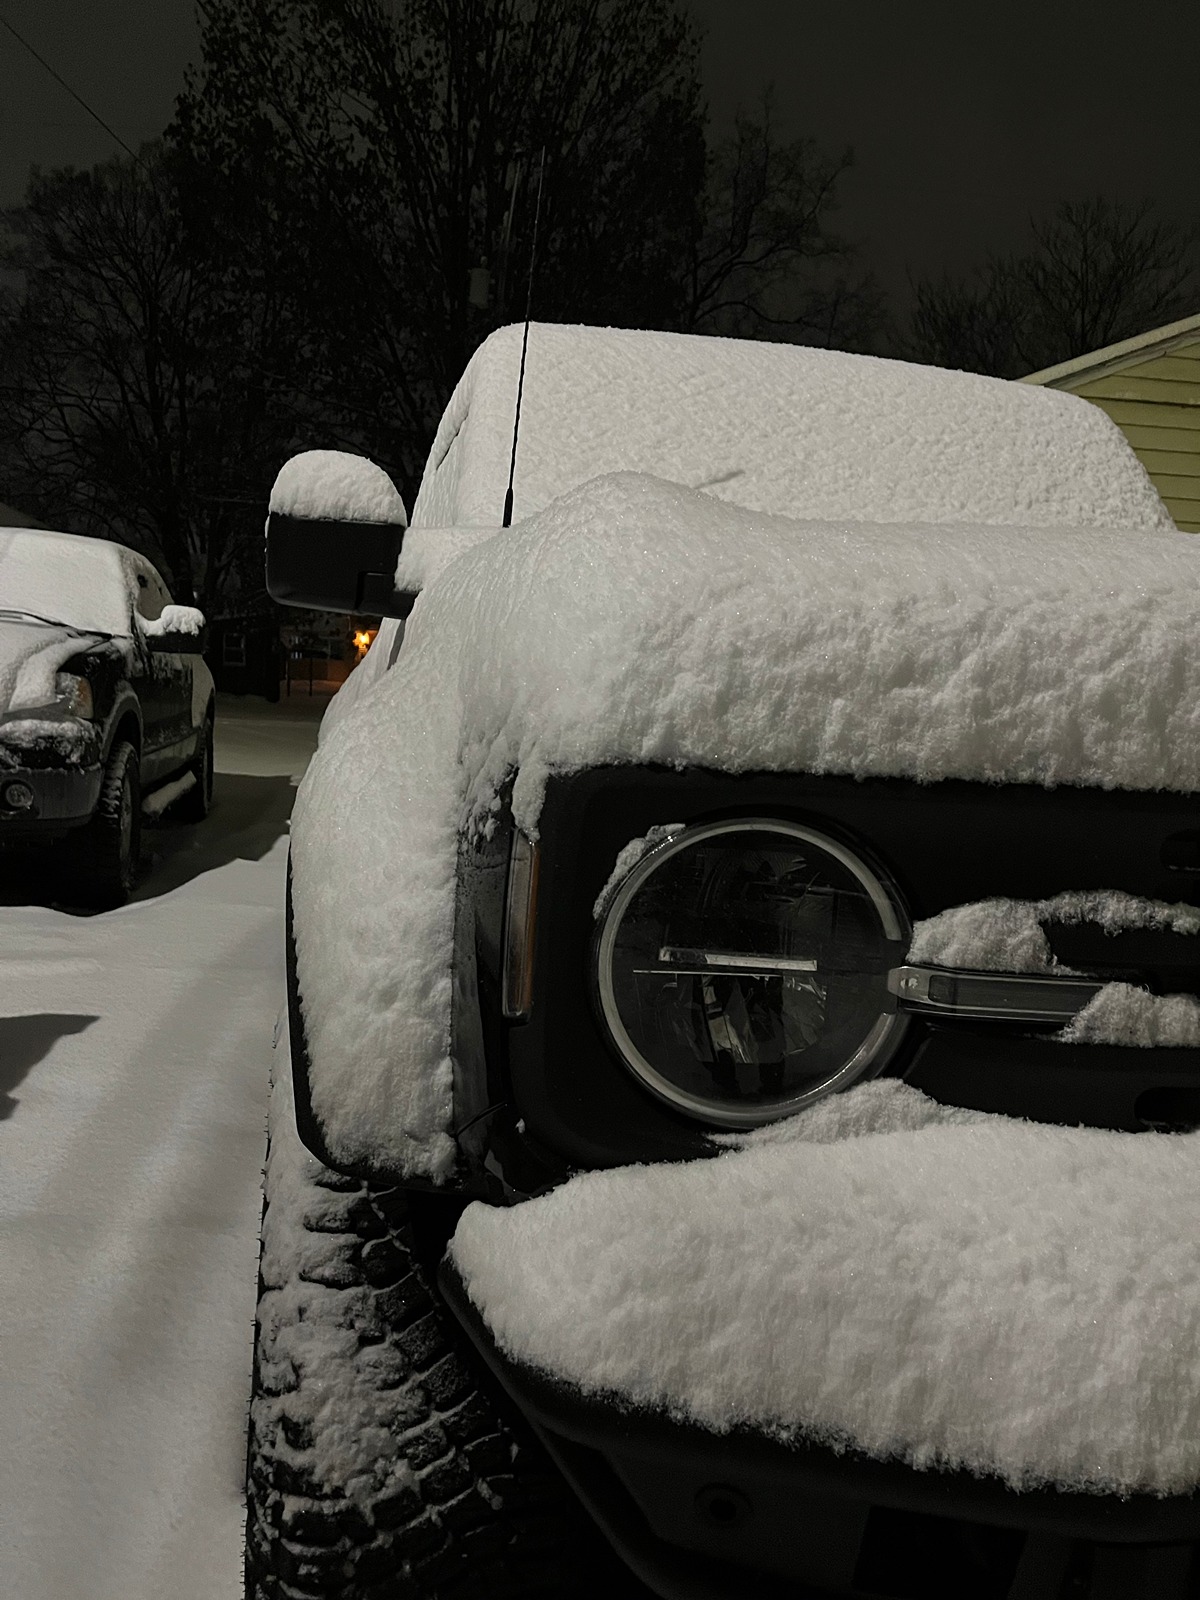 Ford Bronco ❄️❄️❄️❄️ Snow Day Saturday ❄️❄️❄️❄️❄️ IMG_2076.JPG